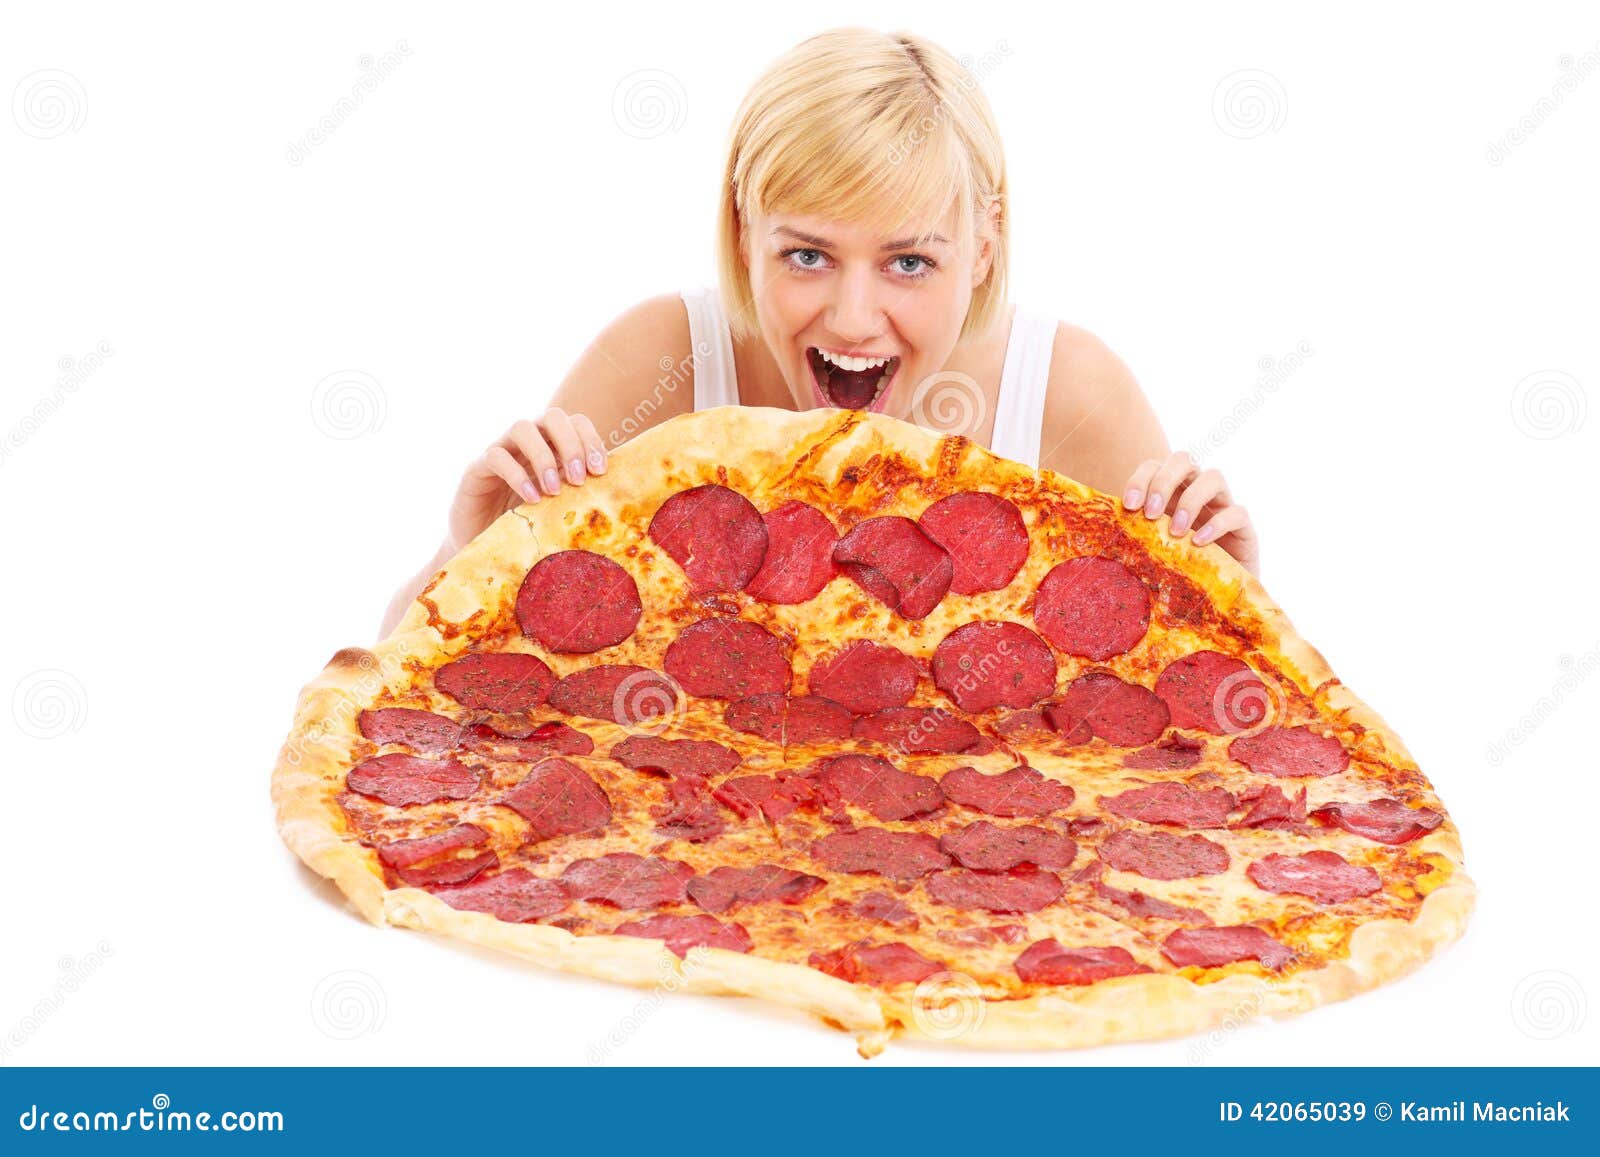 woman eating huge pizza